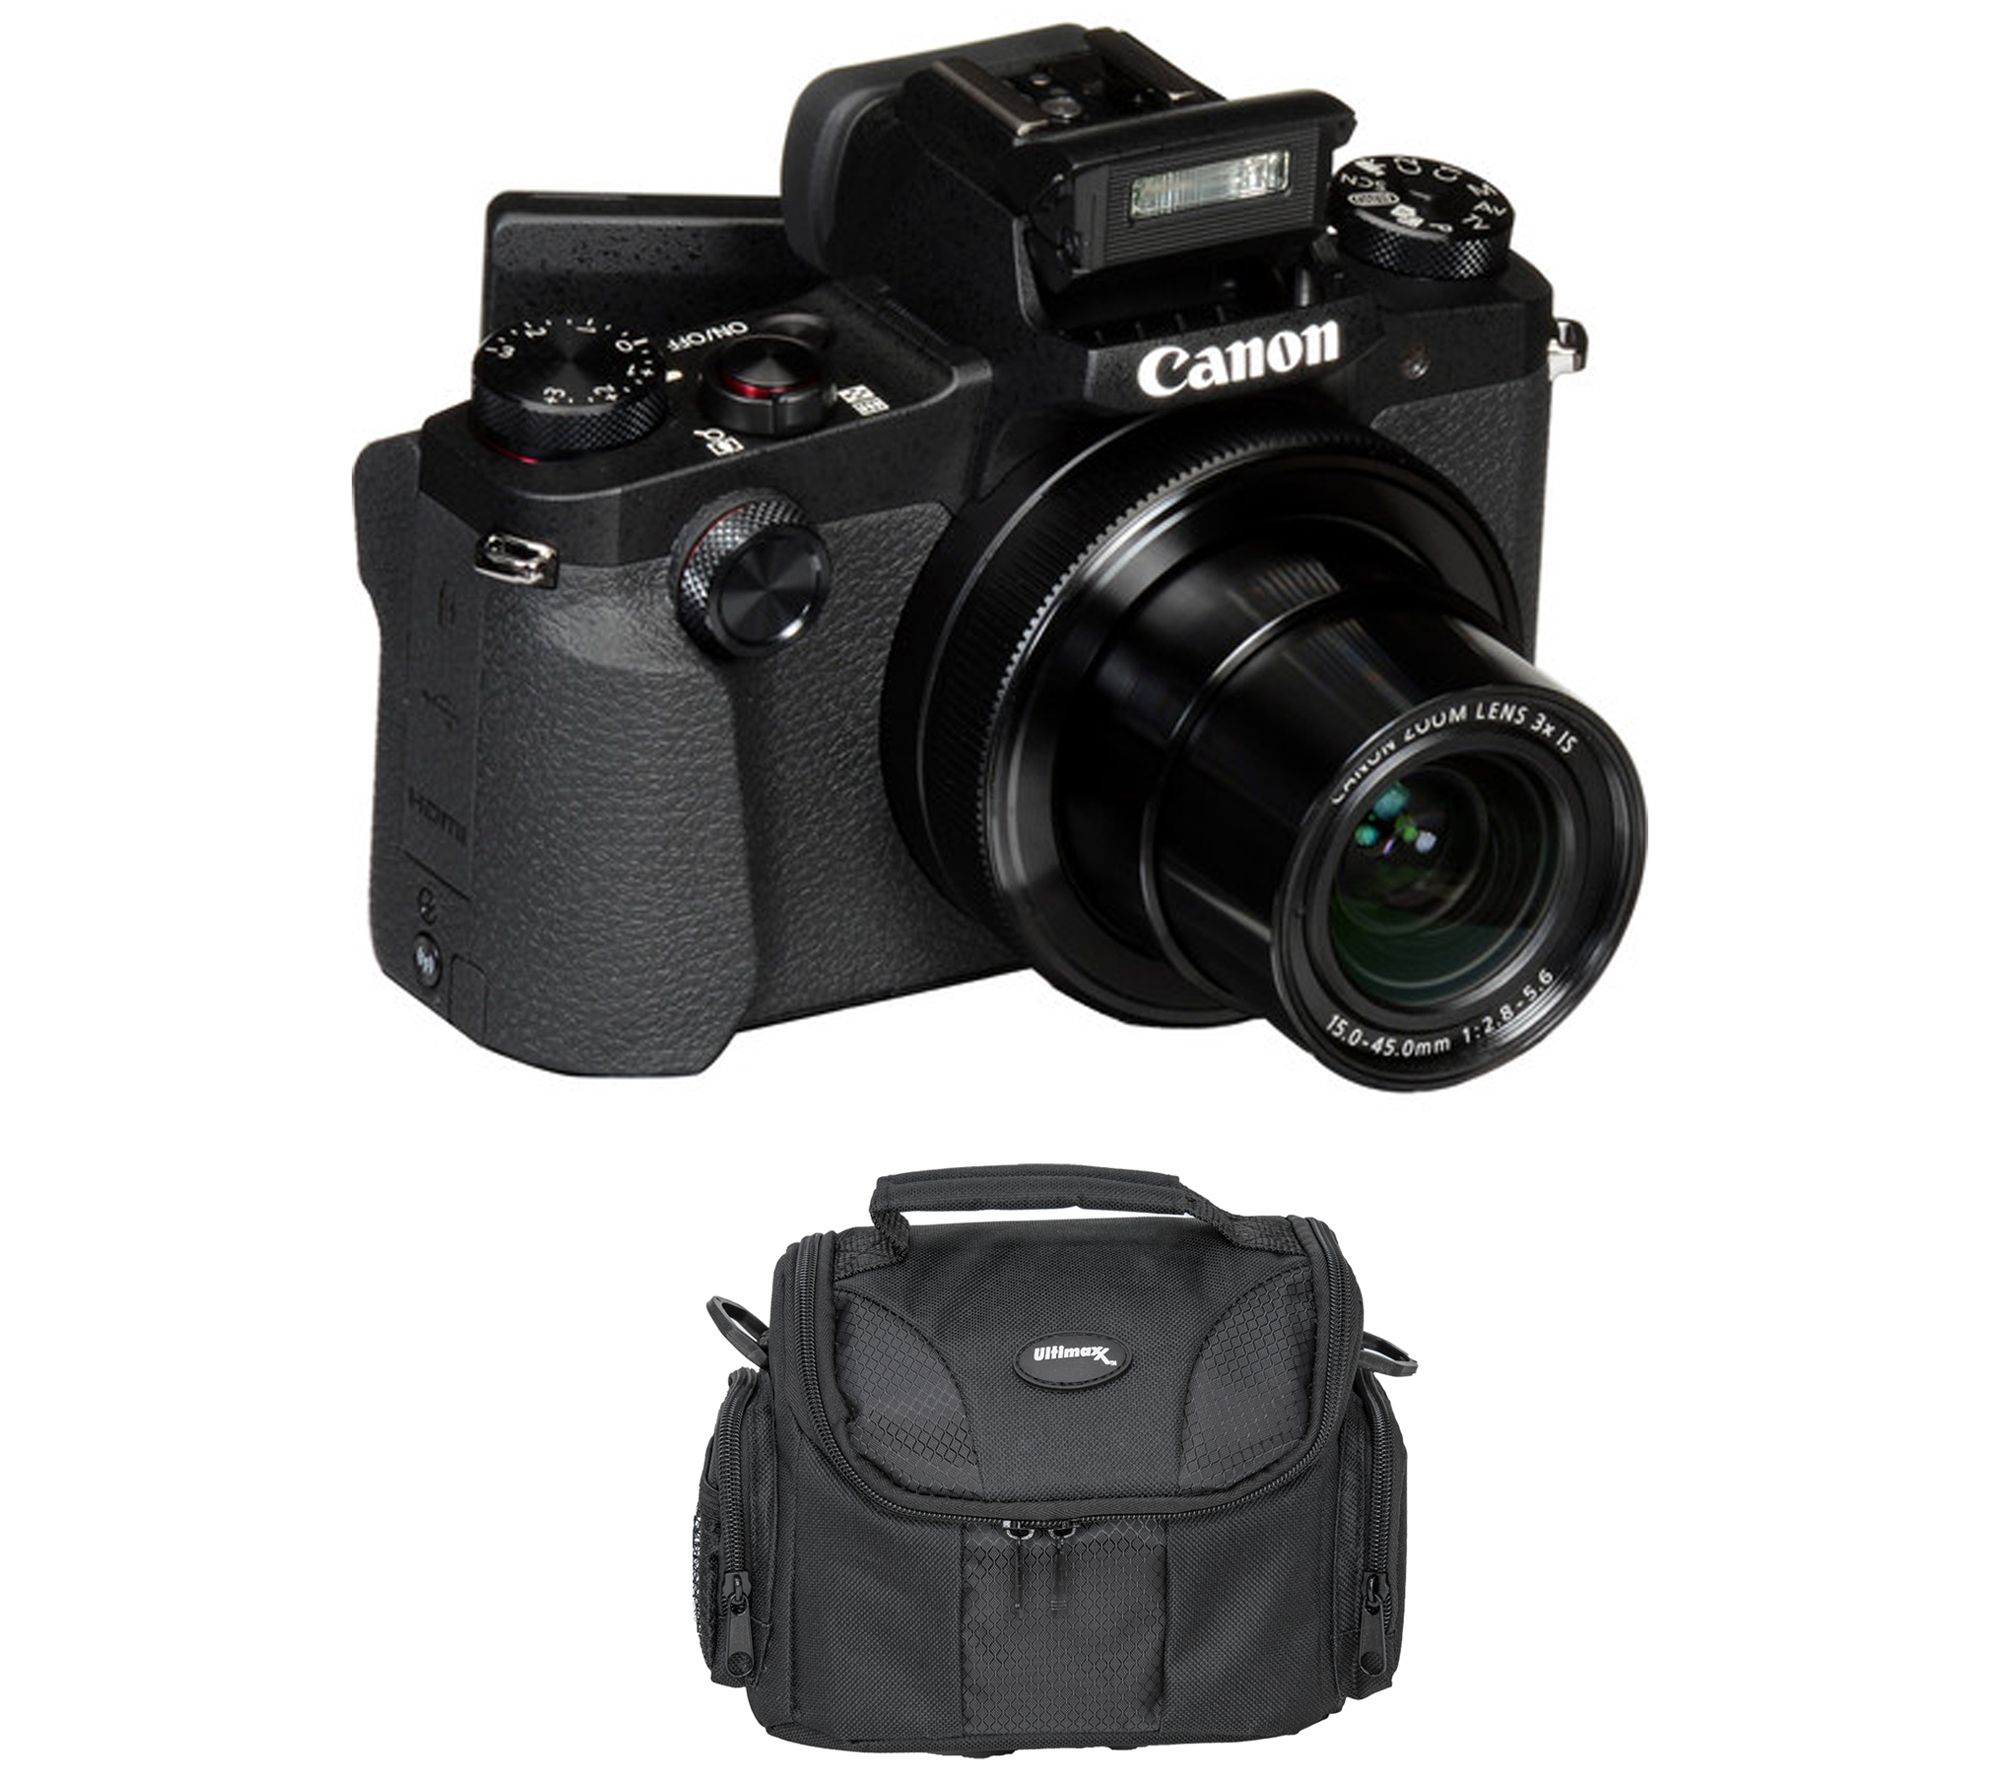 Canon PowerShot G1 X Mark III Digital Camera - QVC.com